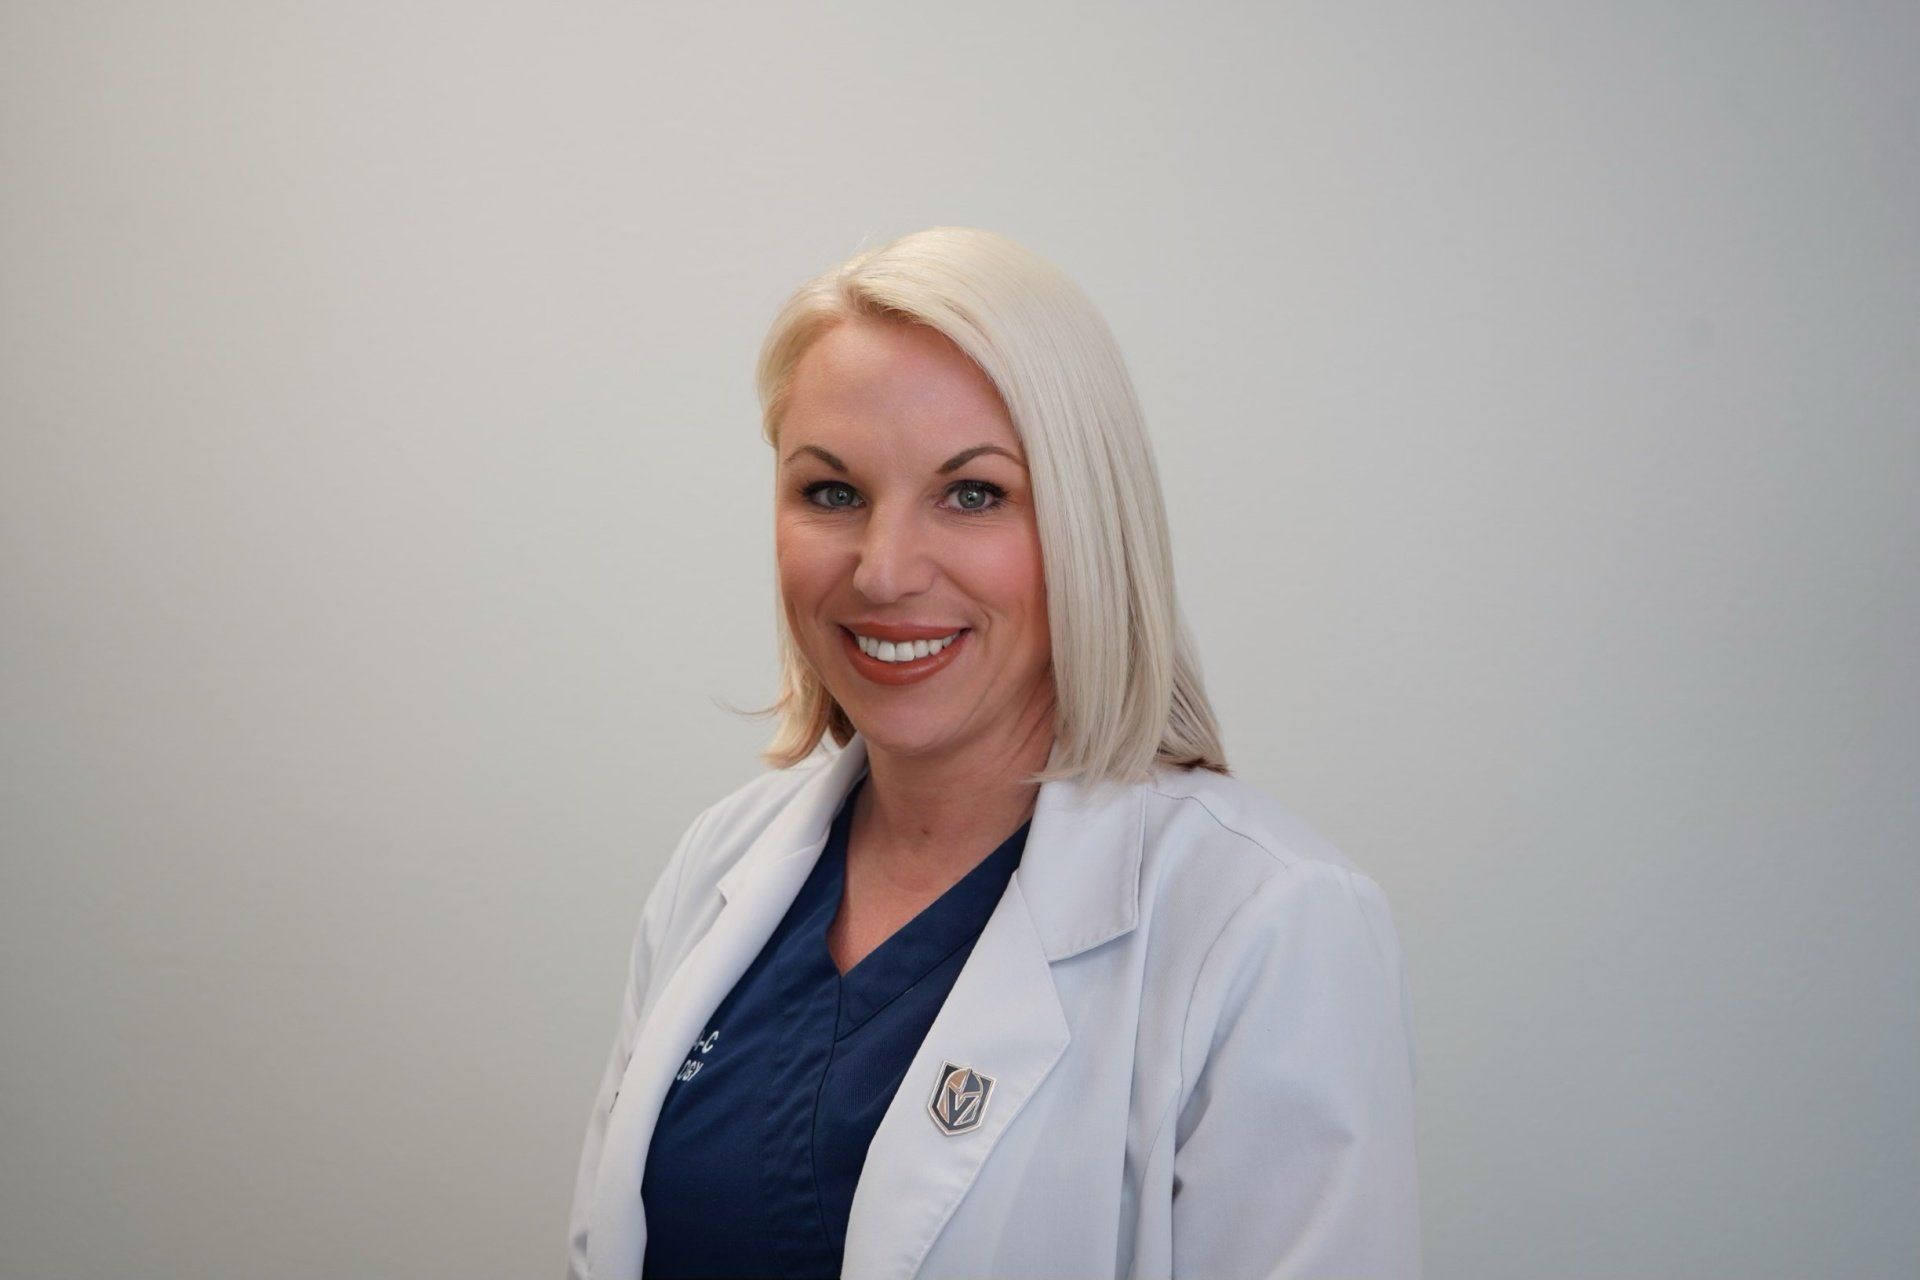 Amanda Hanor — Las Vegas, NV — Linda Woodson Dermatology